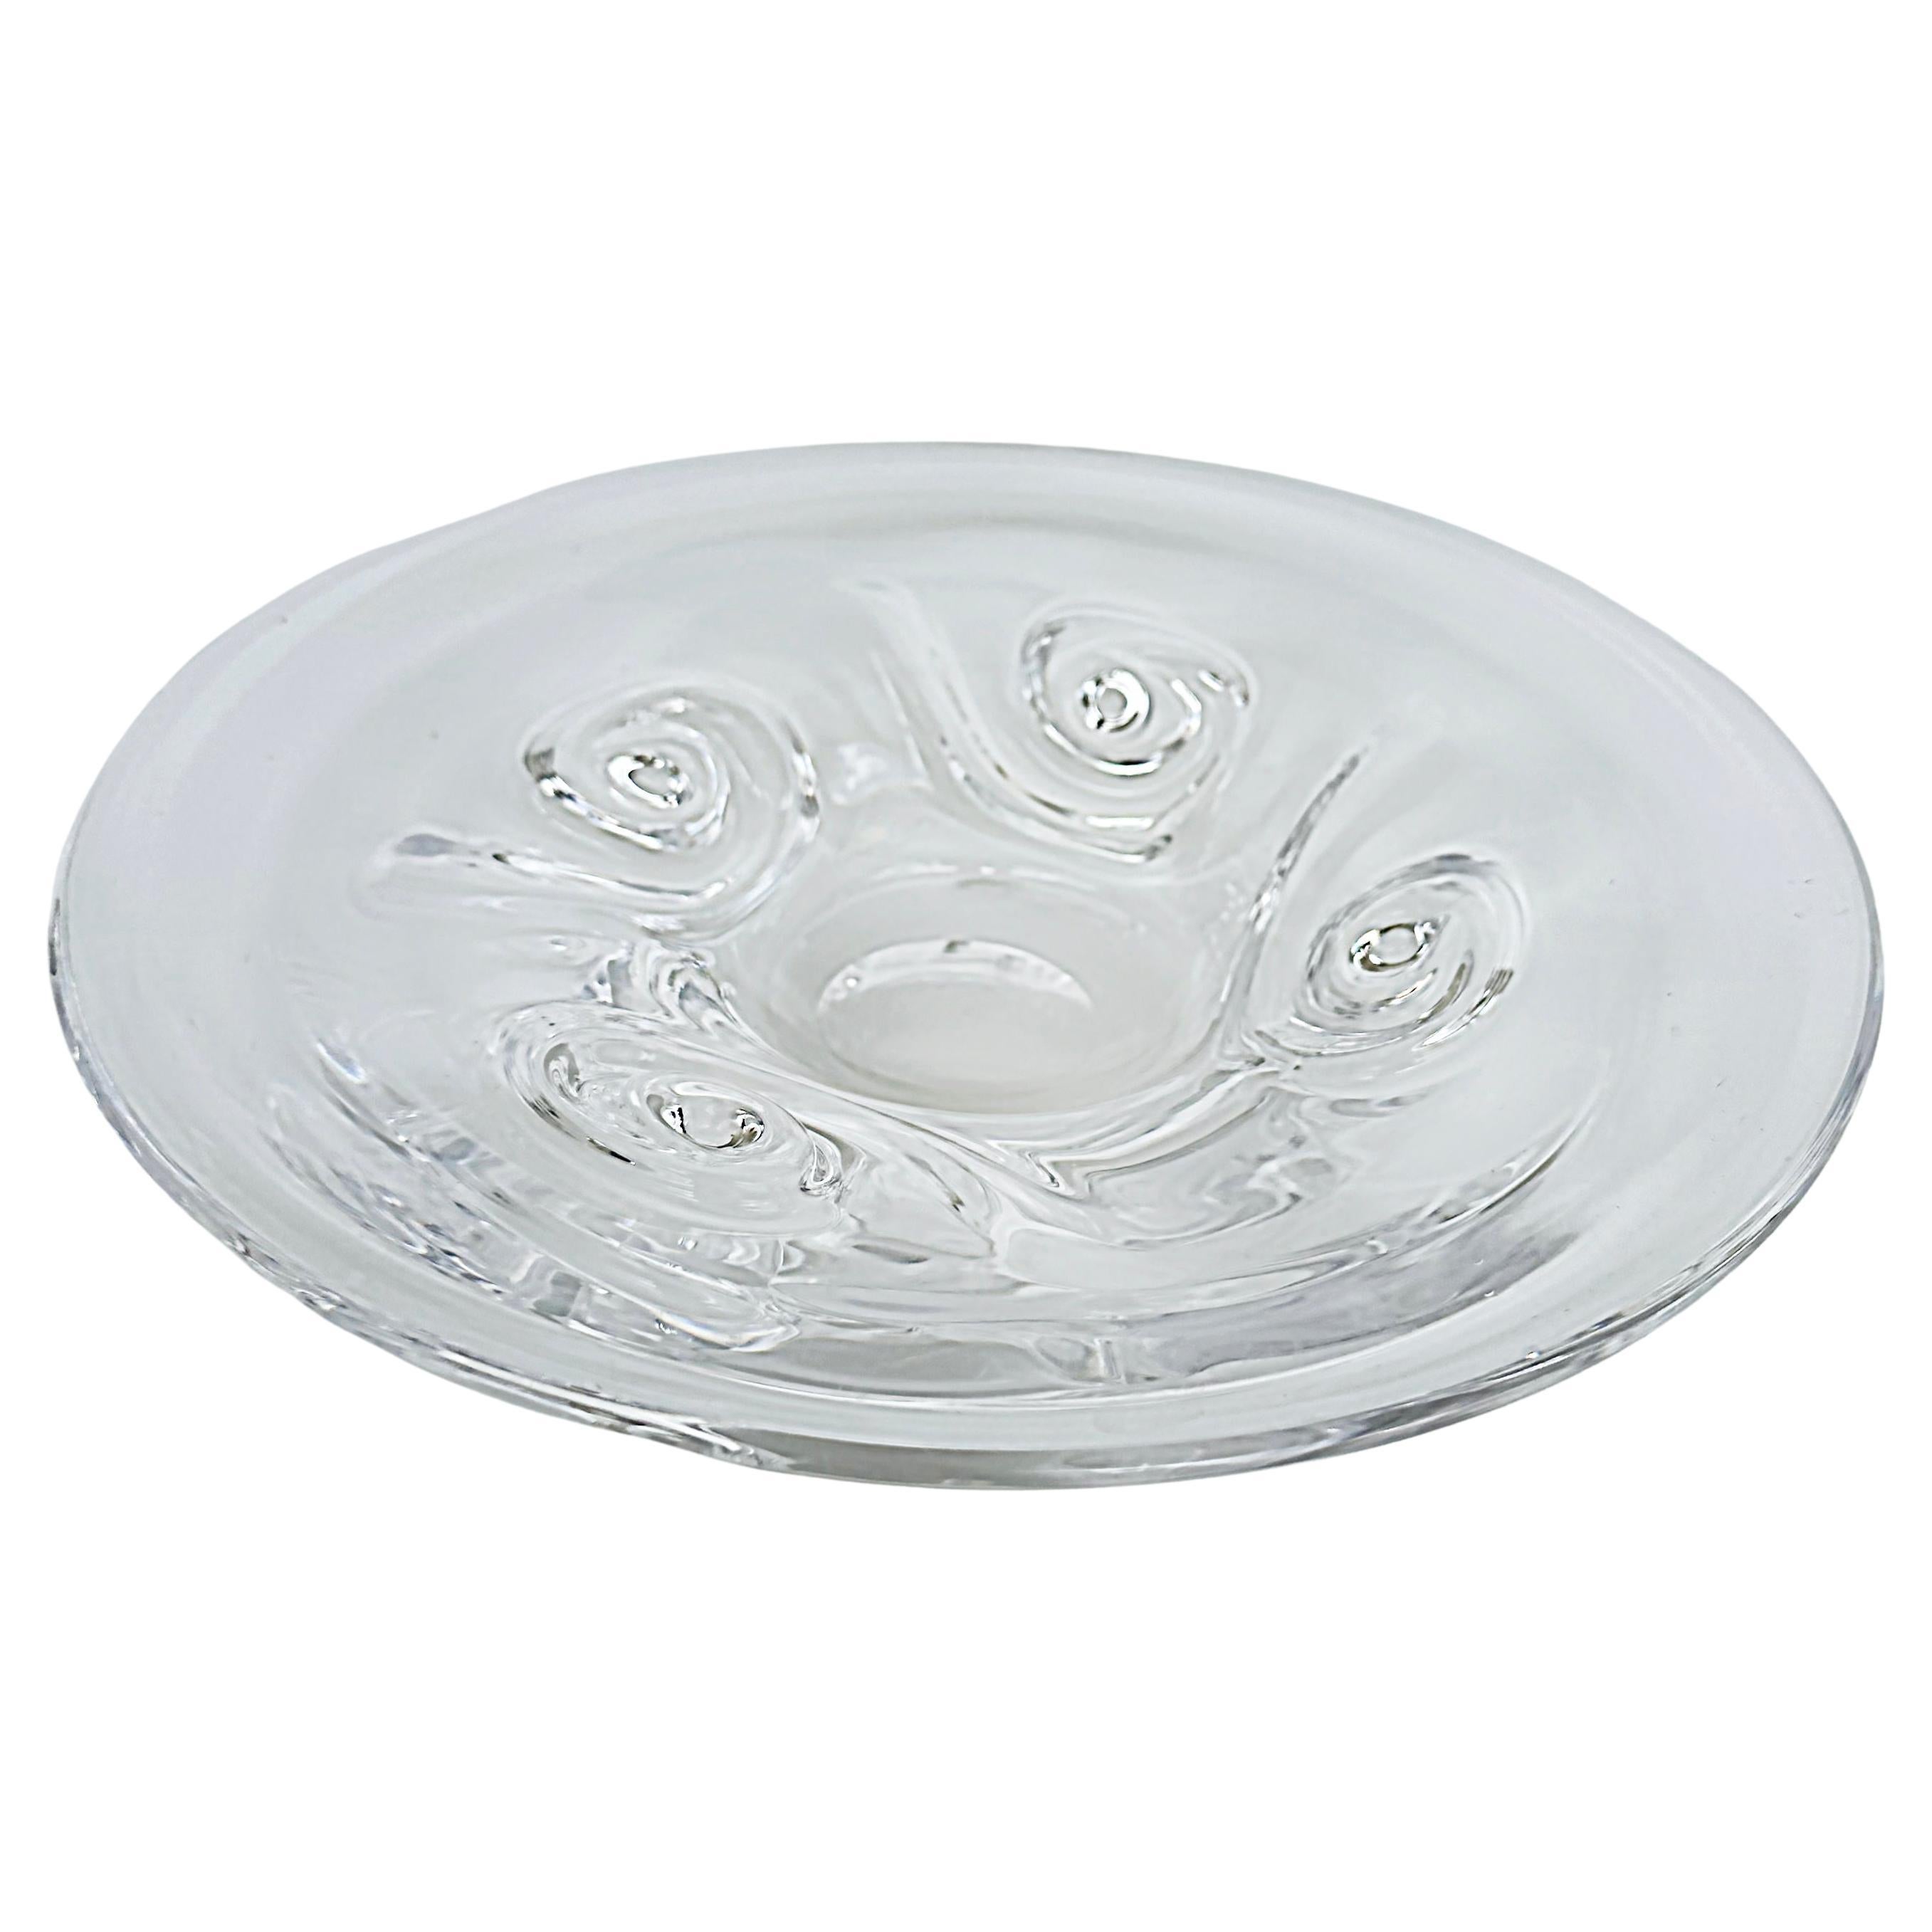 Swedish Kosta Boda Sweden Goran Warff Modernist Art Glass Bowl with Swirl Designs For Sale